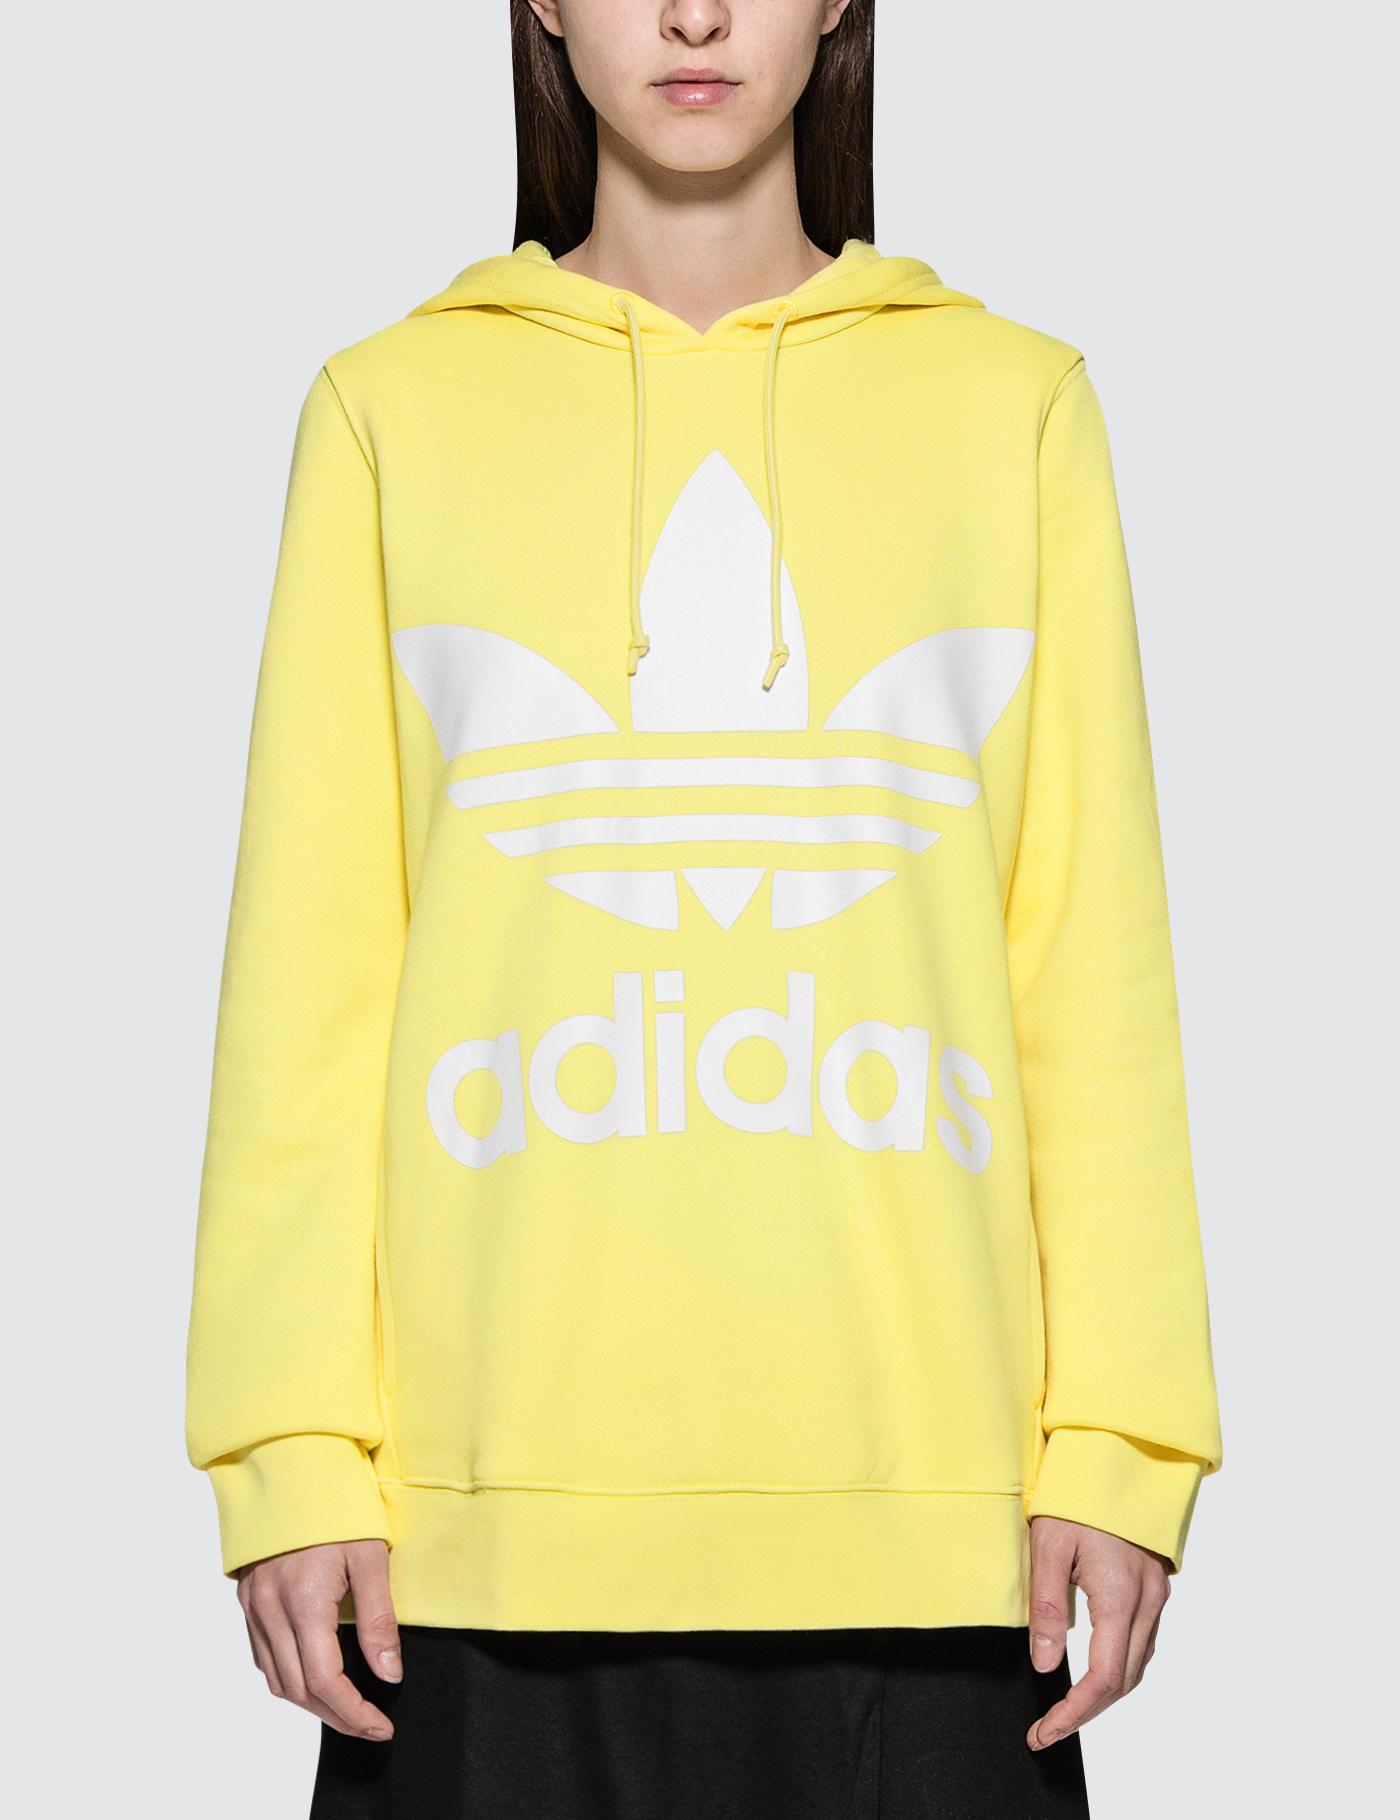 qqqwjf.adidas trefoil sweatshirt yellow , Off 63%,shorin-ryu.net